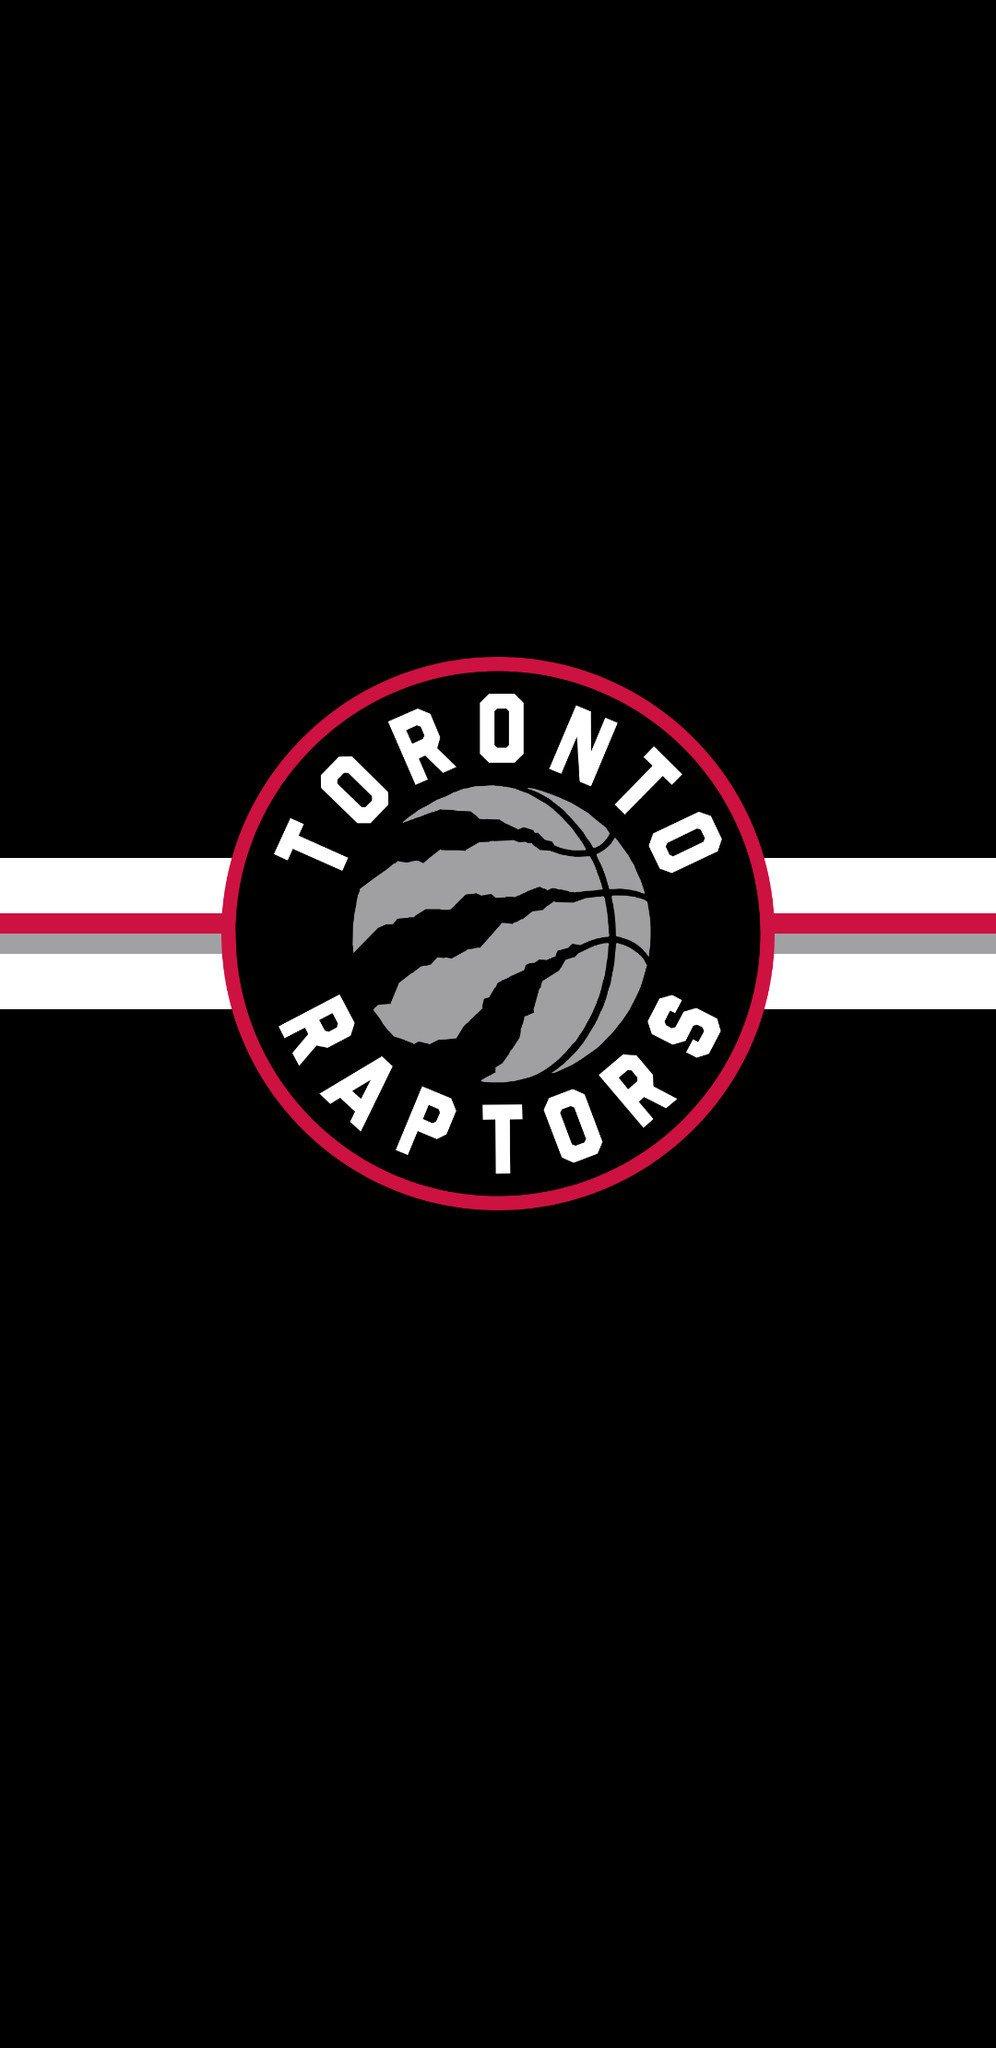 2019 NBA Champion Toronto Raptors Wallpaper by Lancetastic27 on